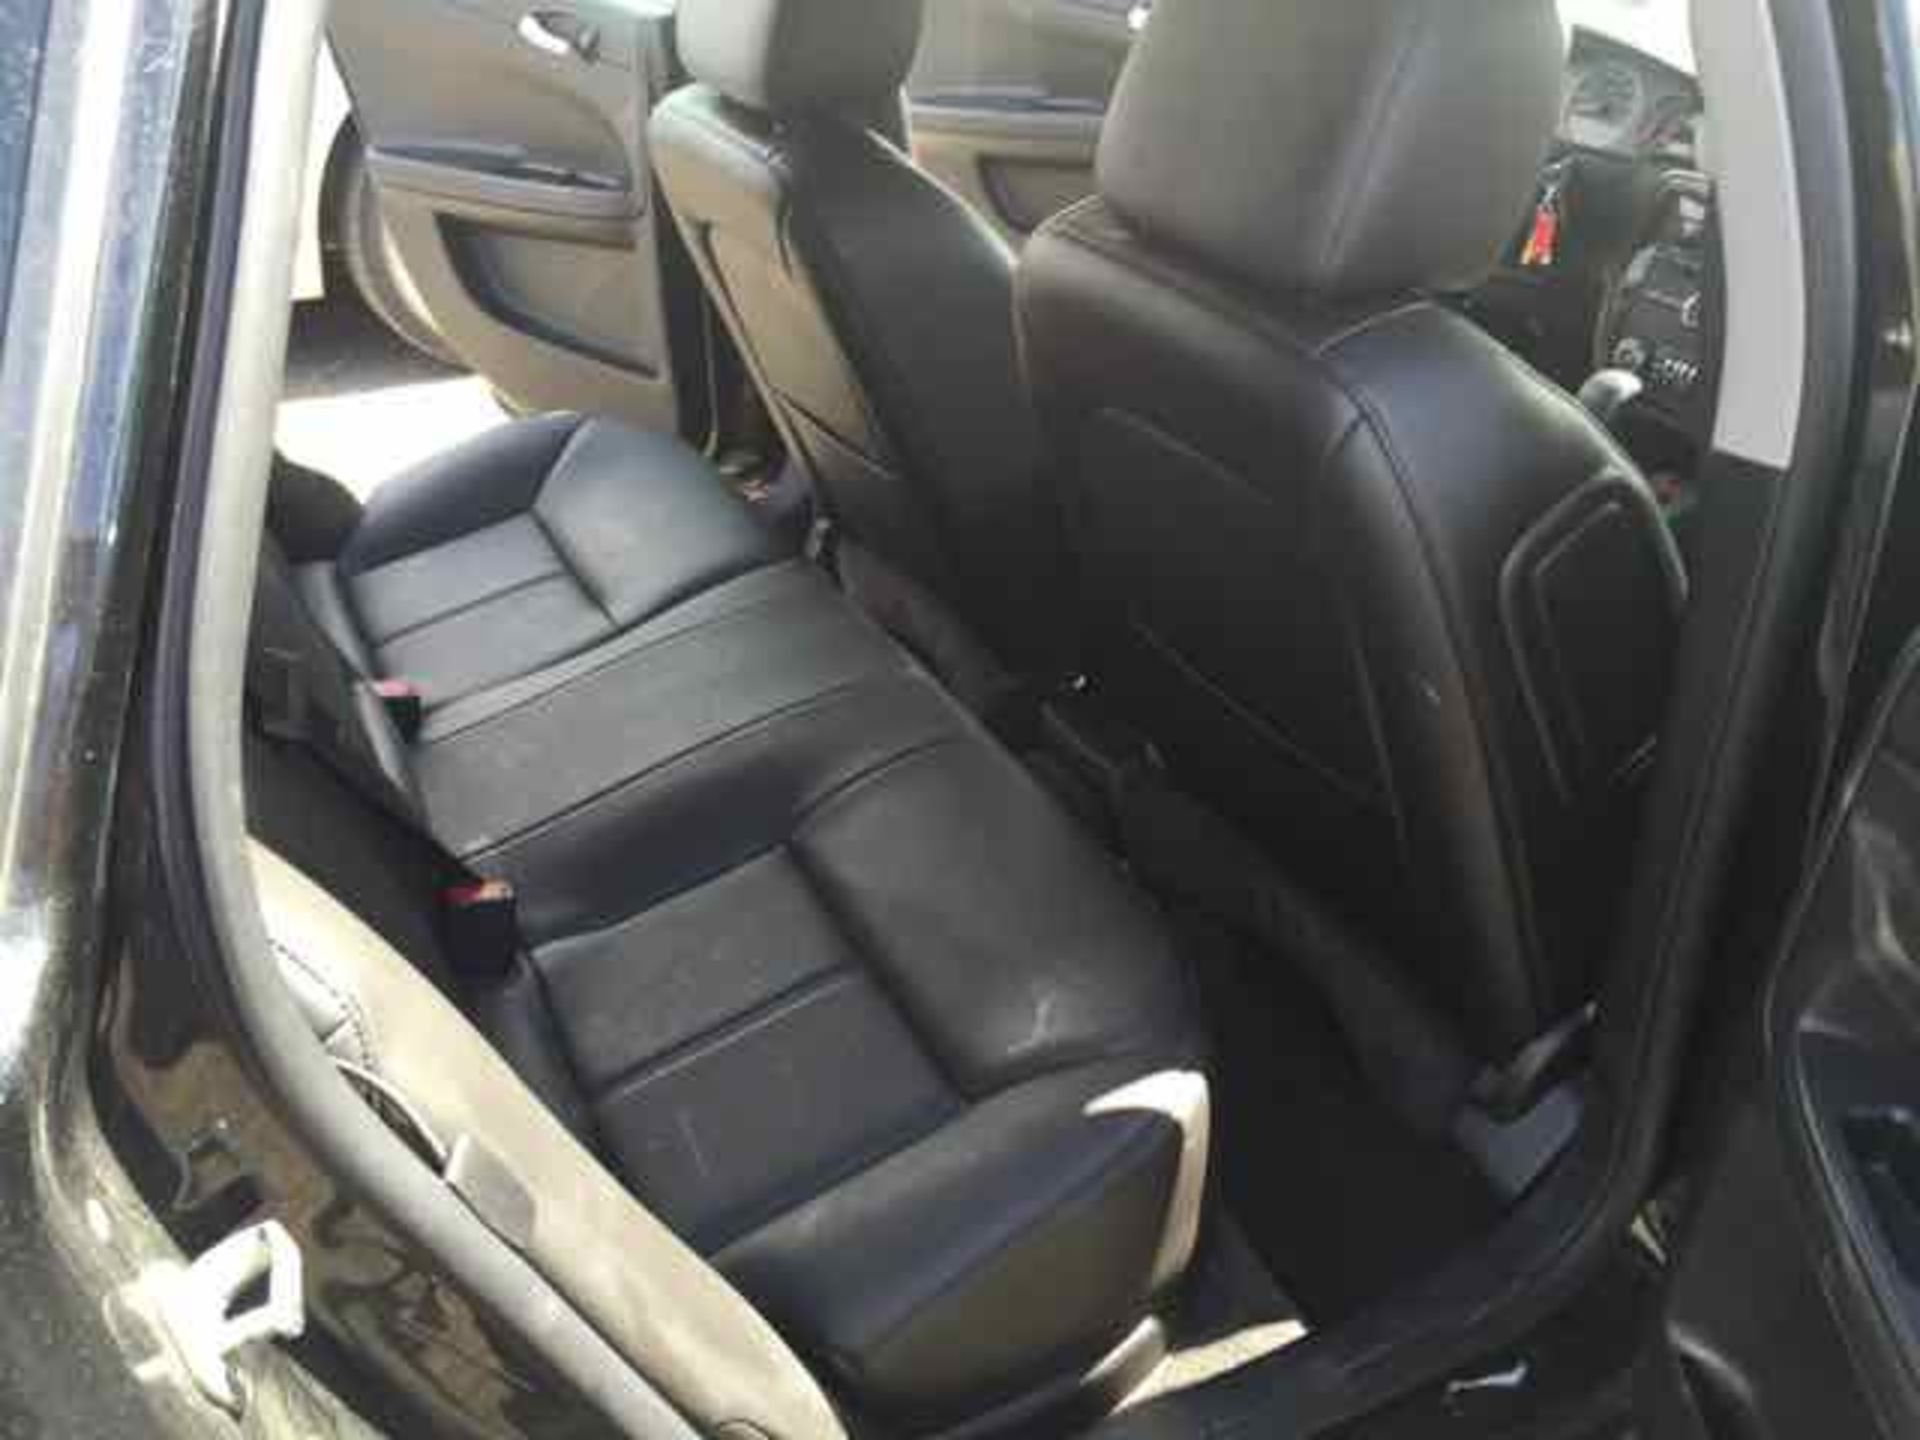 2013 Chevrolet Impala LTZ, VIN 2G1WC5E34D1131453, 4,710 lb. GVWR, 4-door, sunroof, black in color, - Image 10 of 12